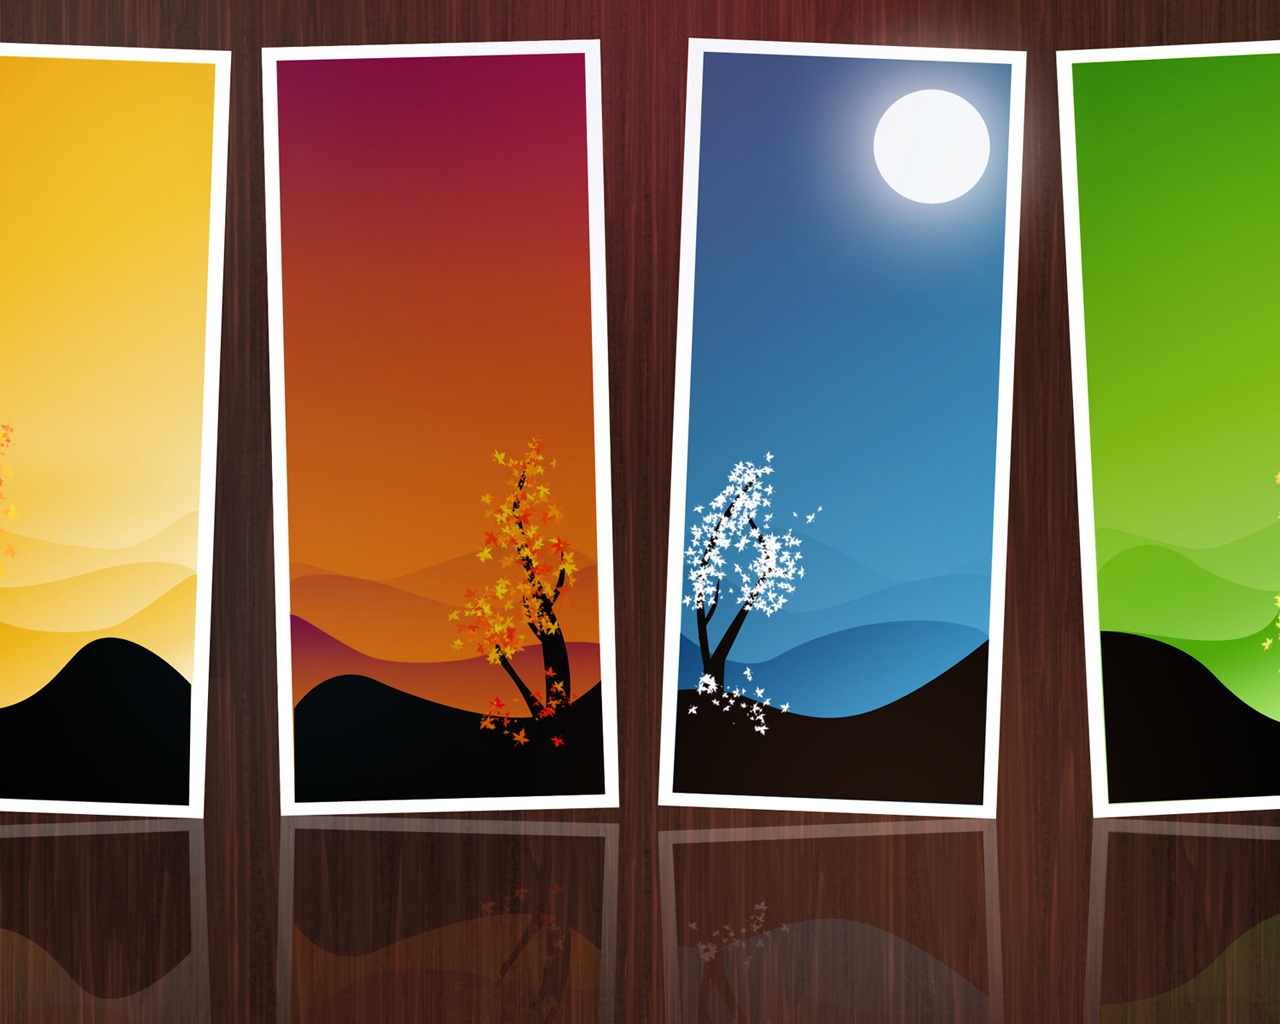 4 Seasons Frames for 1280 x 1024 resolution